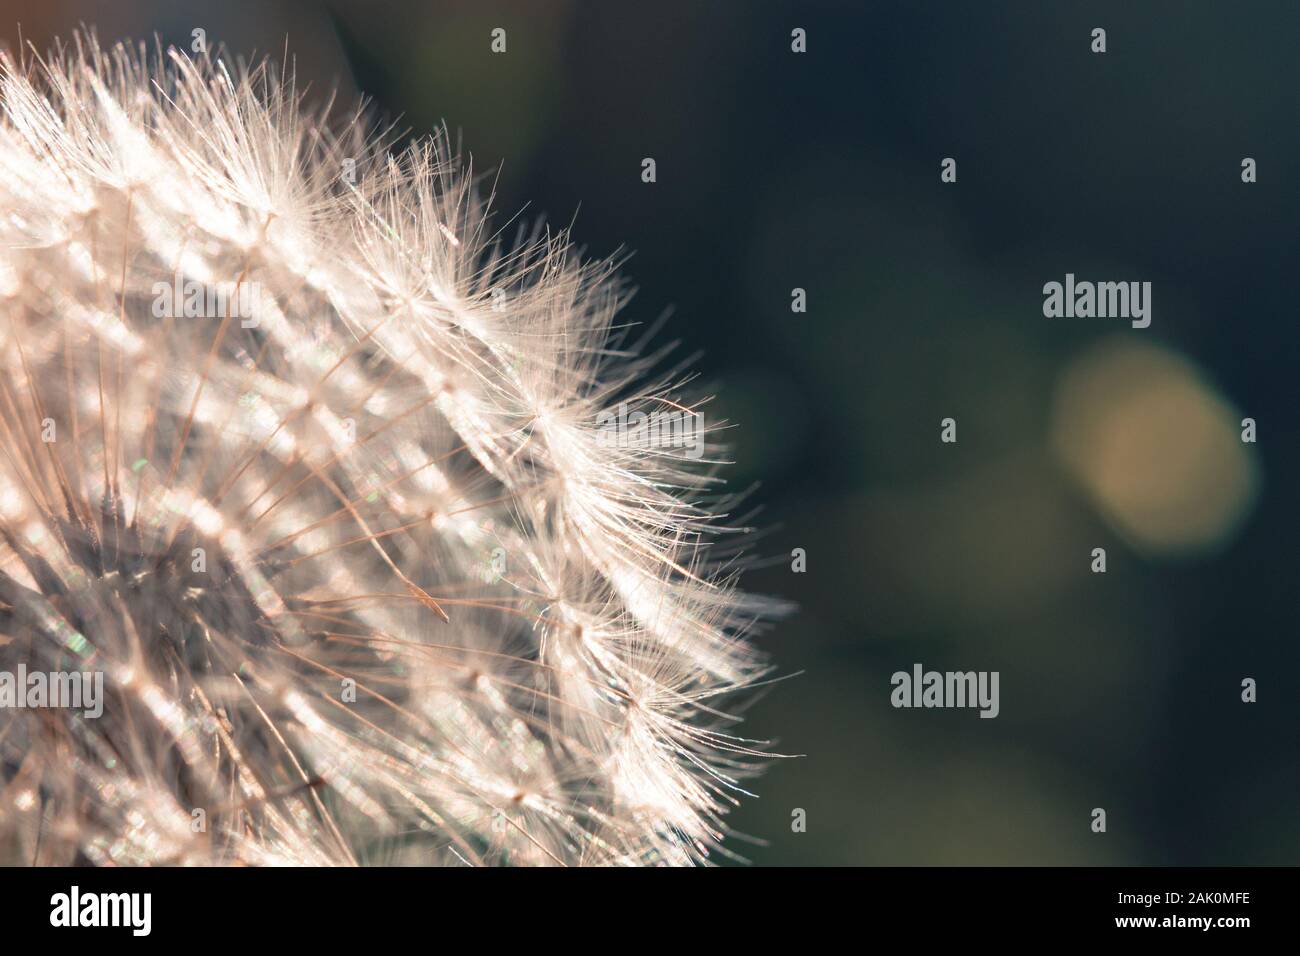 dandelion - close up view of white flower, dark blurred background Stock Photo